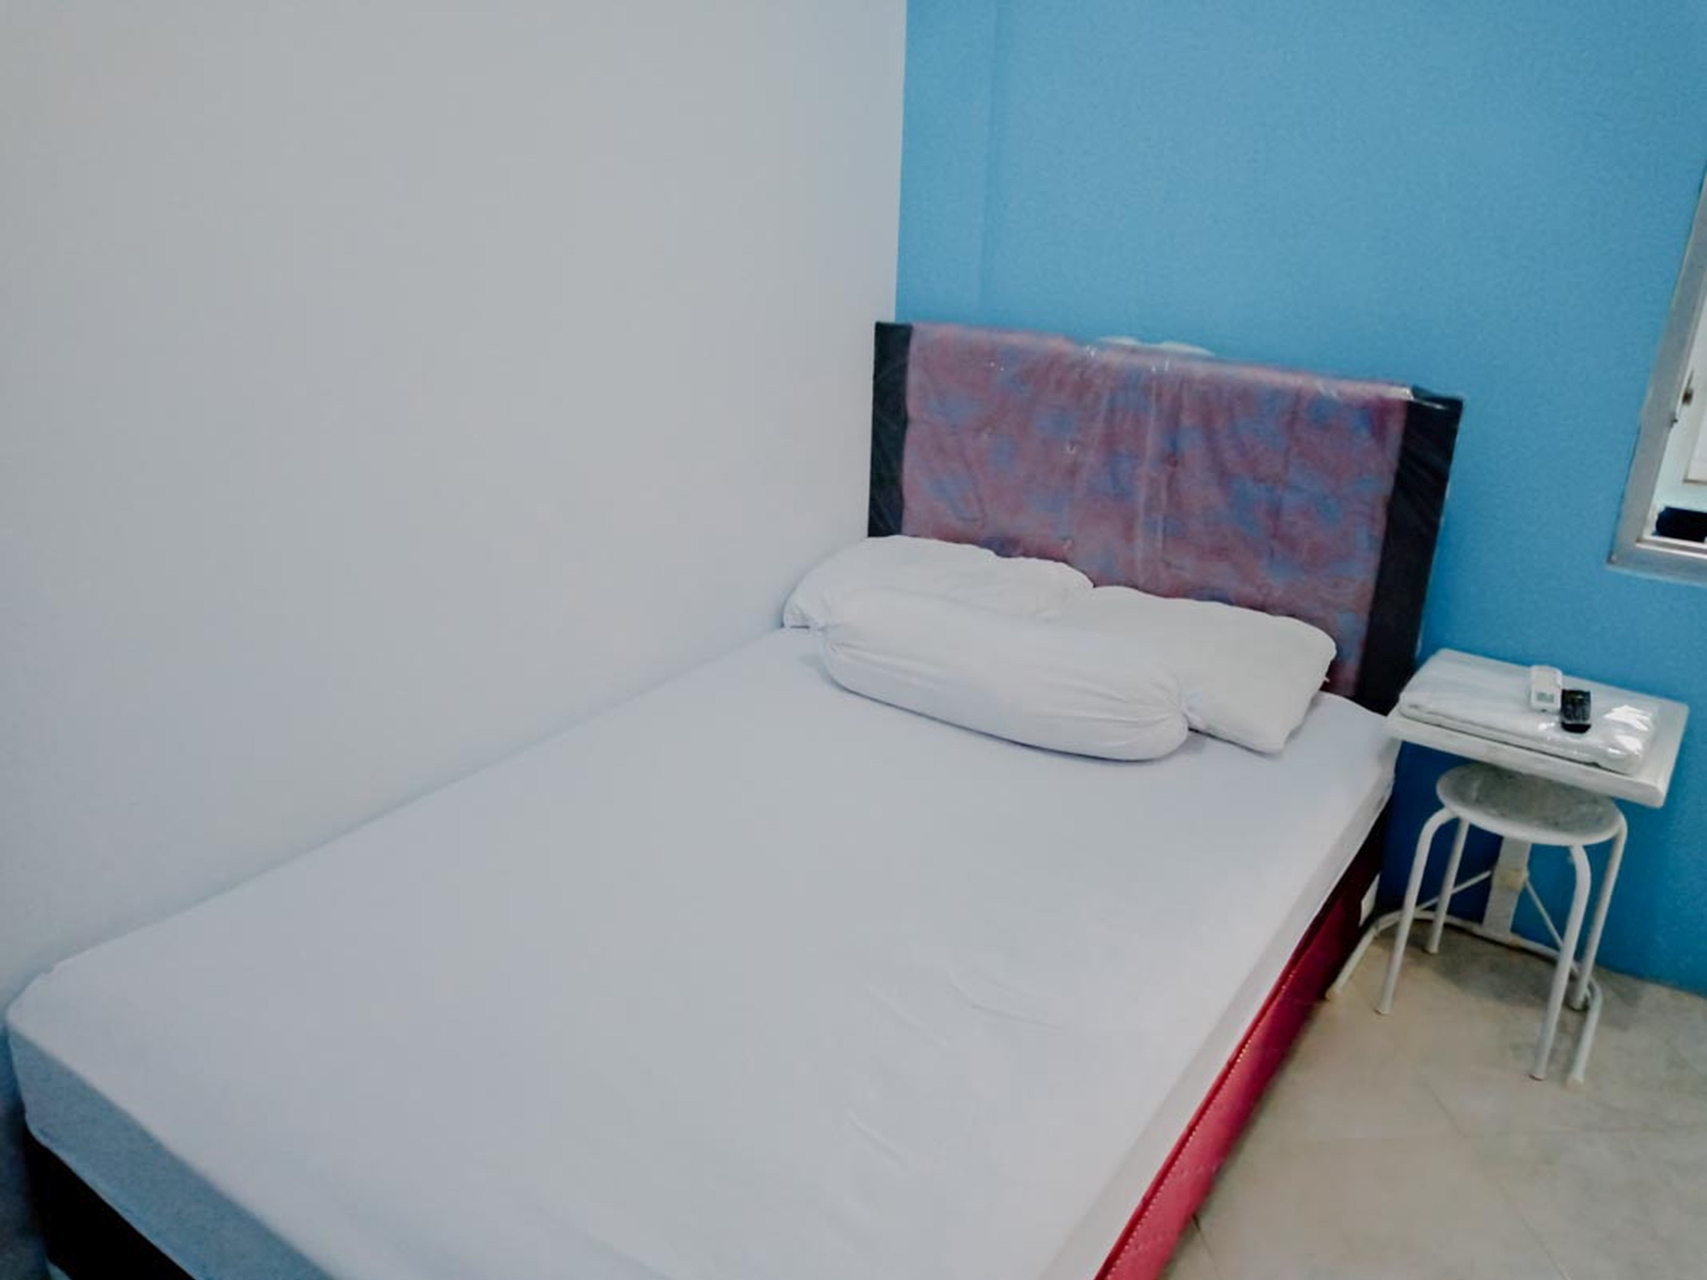 Bedroom 2, Like 2 Residence Syariah near Universitas PGRI Madiun, Madiun